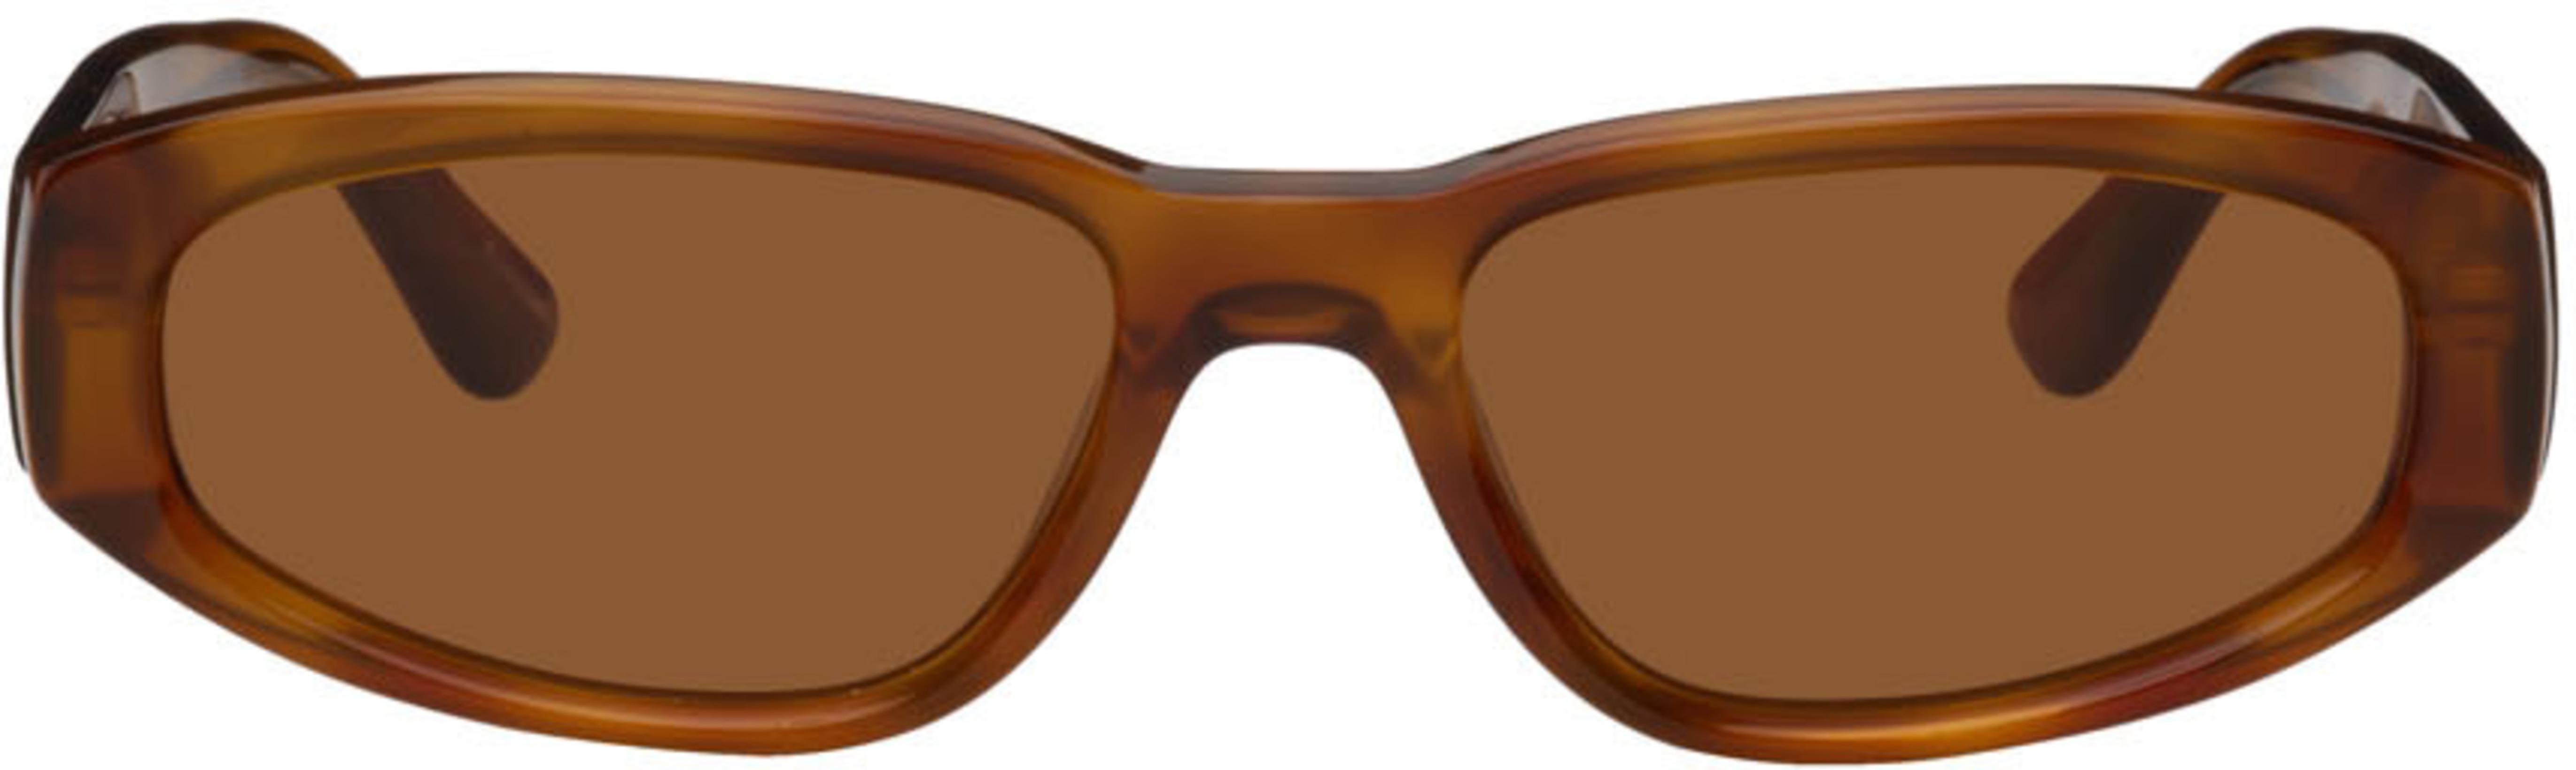 Tortoiseshell Lab 1st Sunglasses by CHIMI